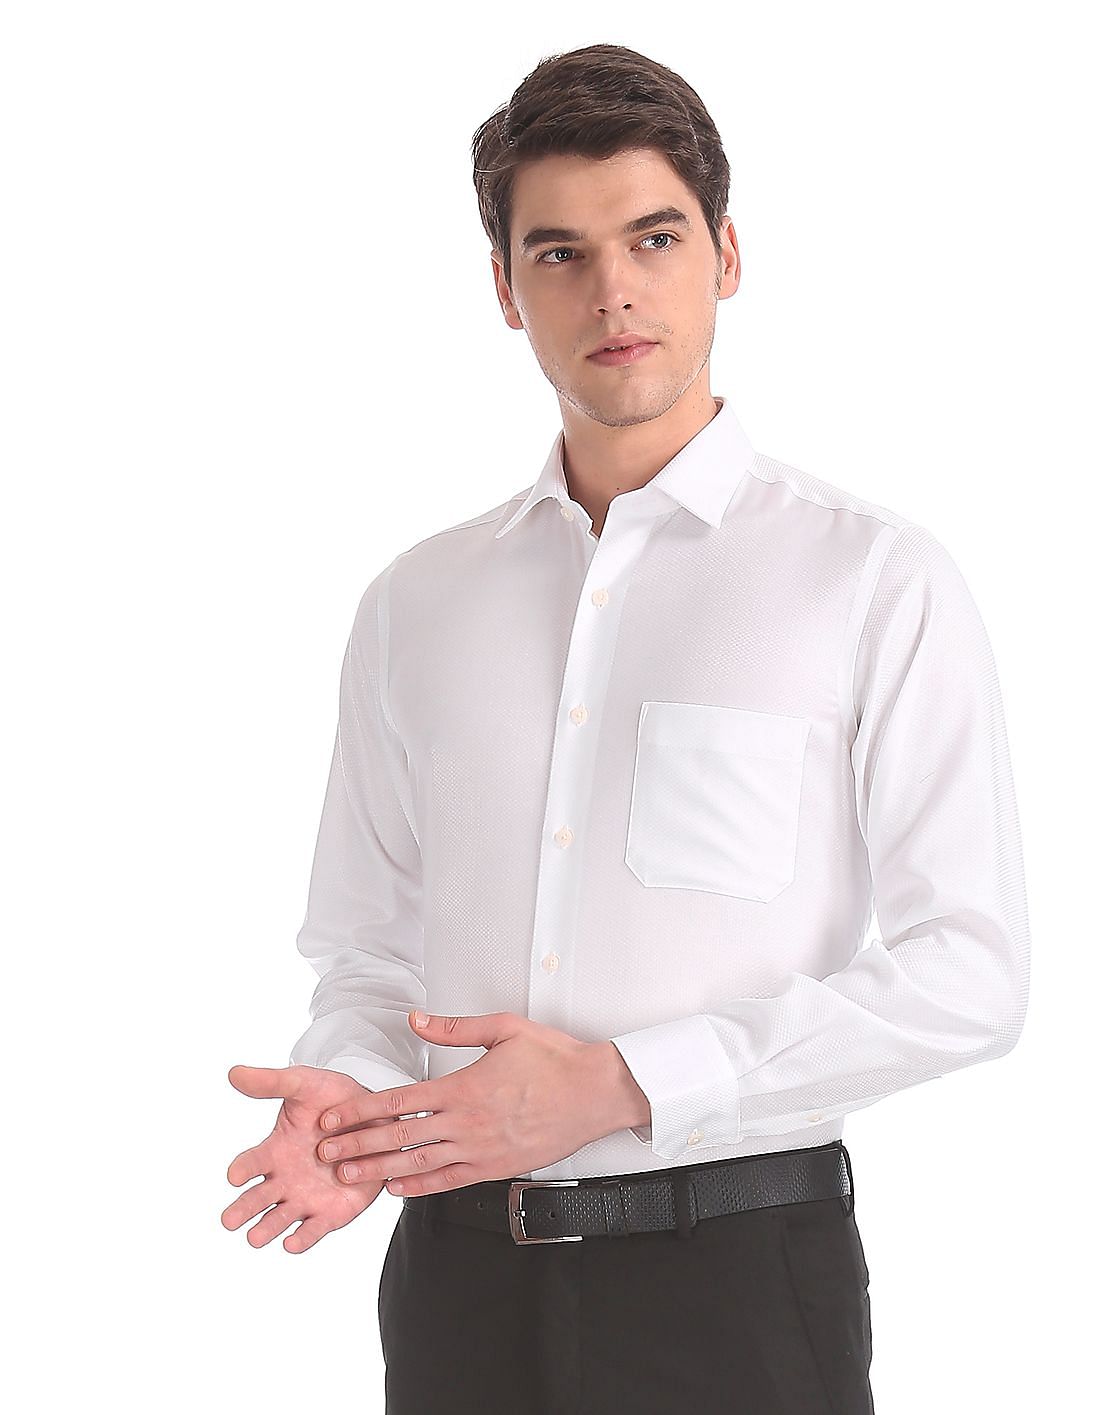 Buy Men White Wrinkle Resistant Patterned Shirt online at NNNOW.com